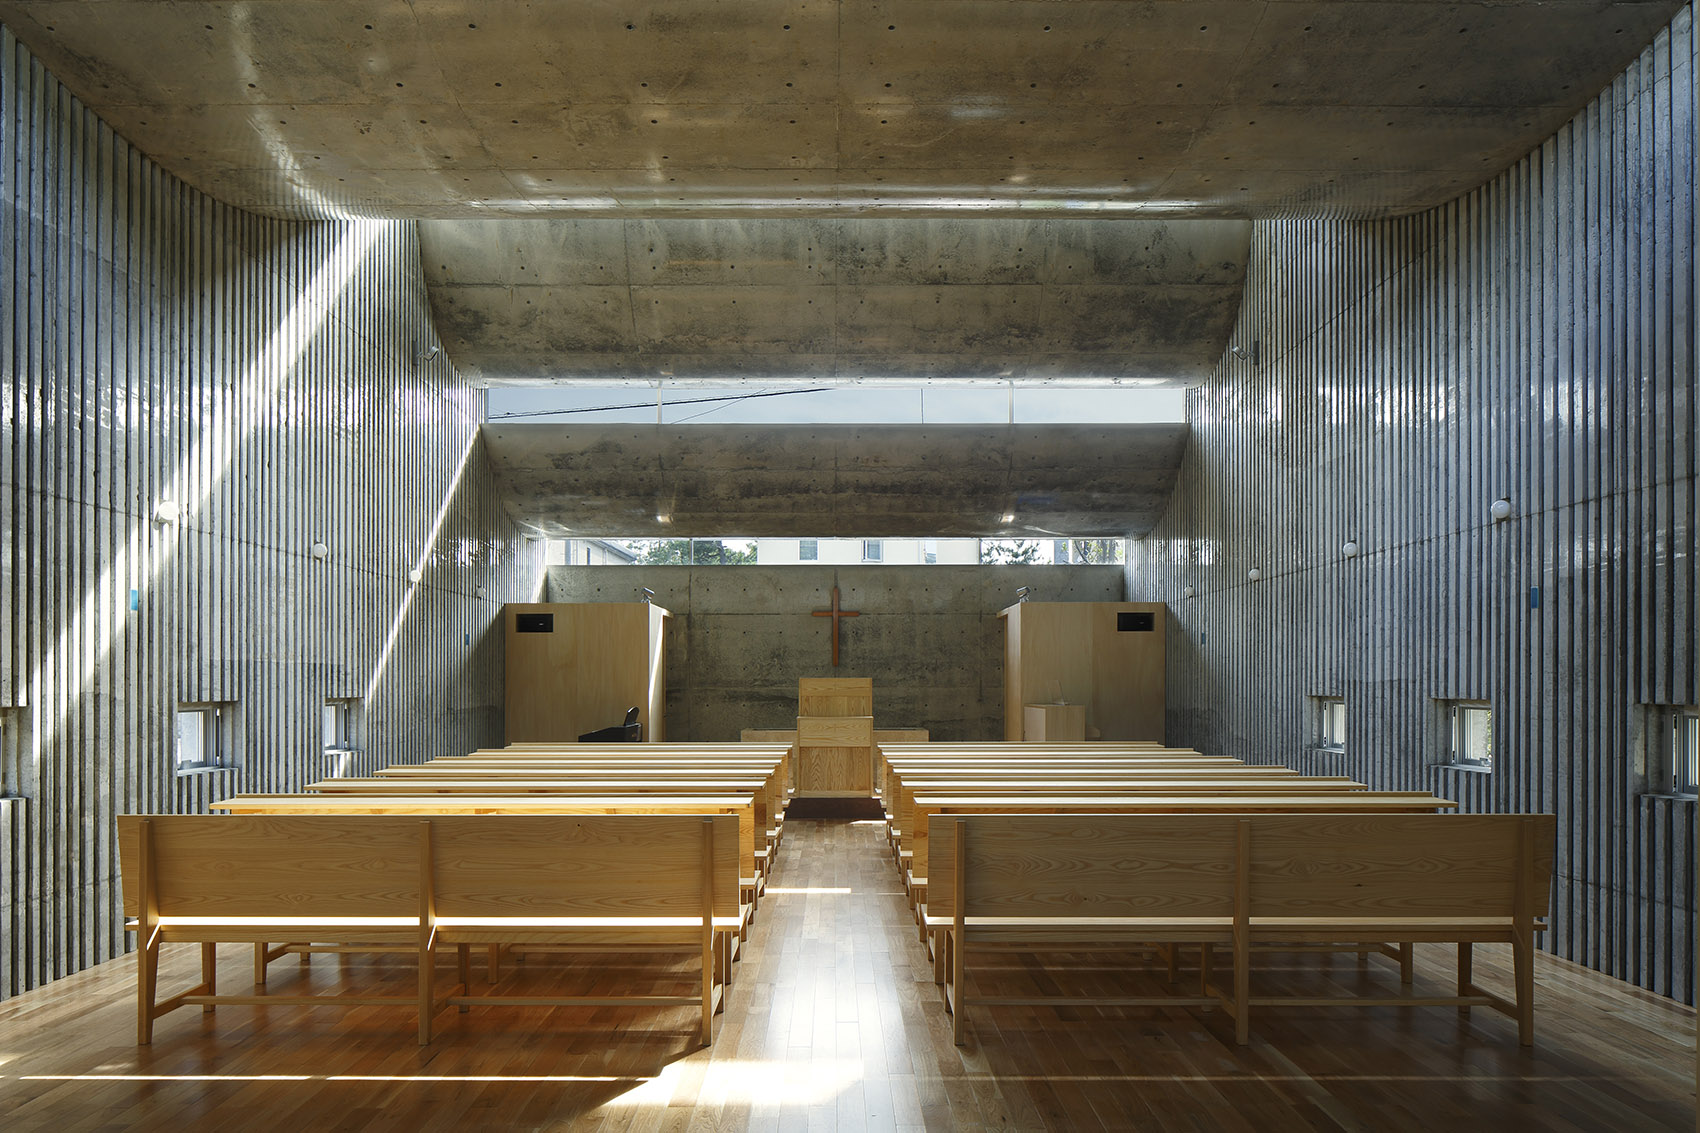 048-shonan-christ-church-by-takeshi-hosaka-architects.jpg